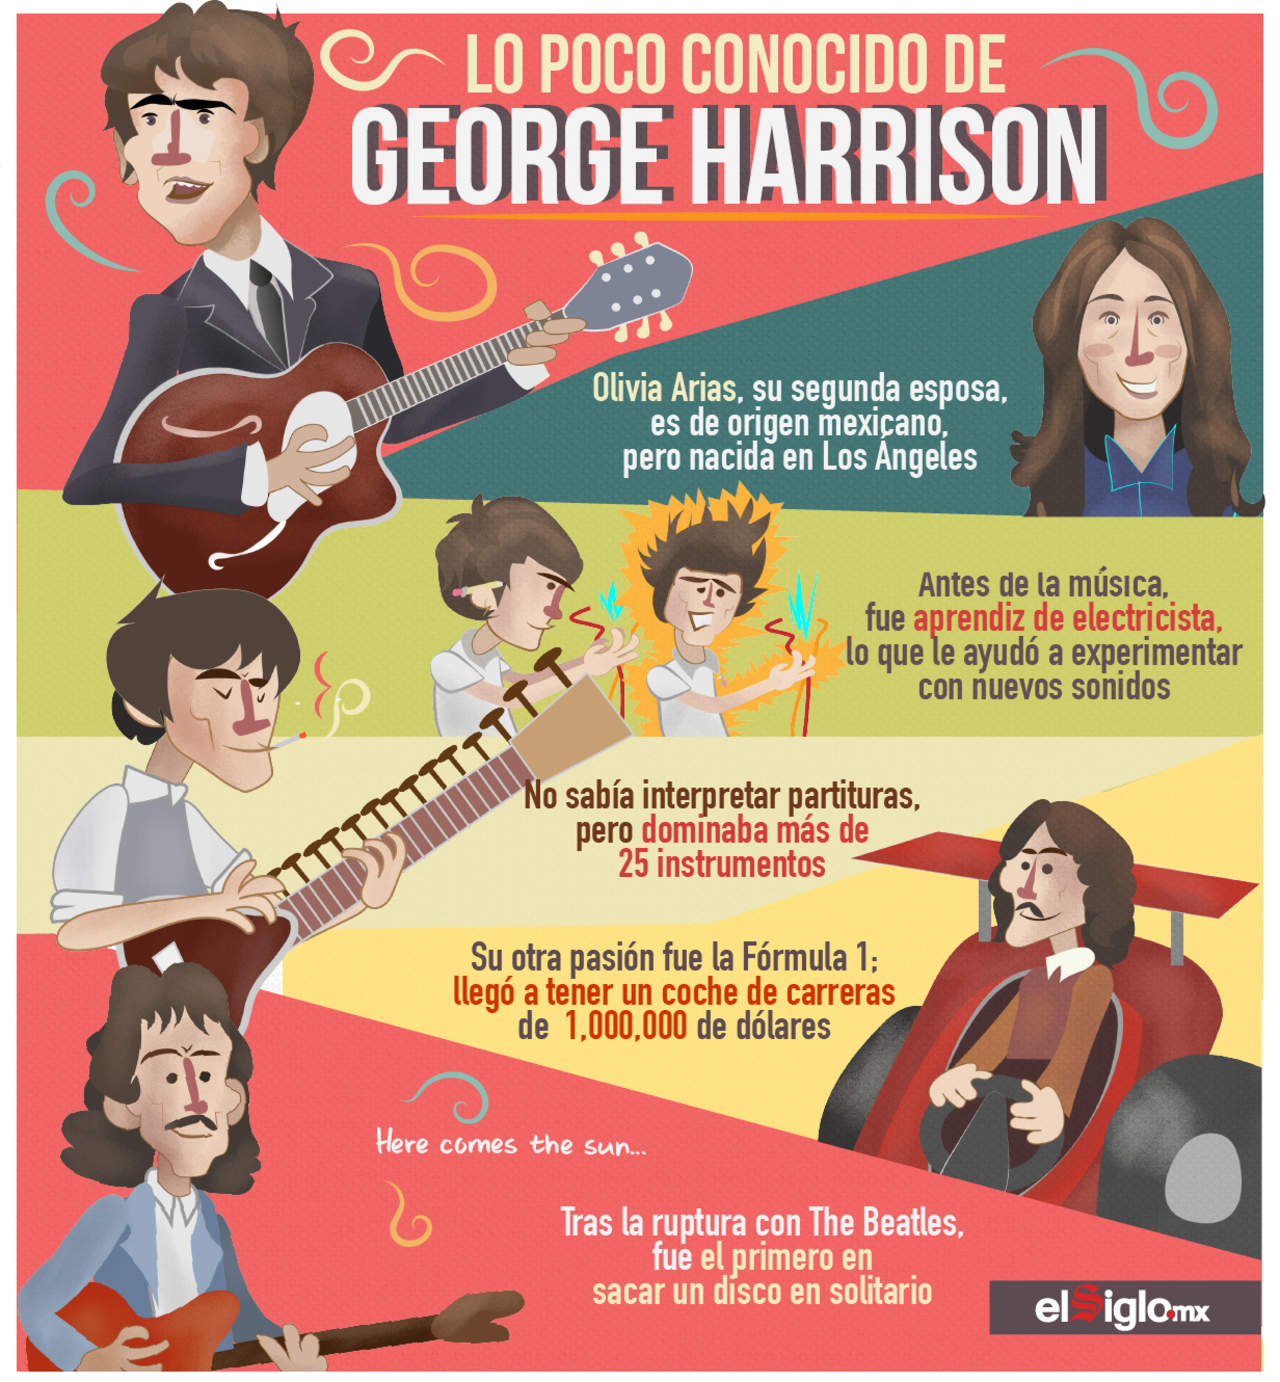 1943: Da su primer respiro George Harrison, músico, cantante y compositor miembro de The Beatles